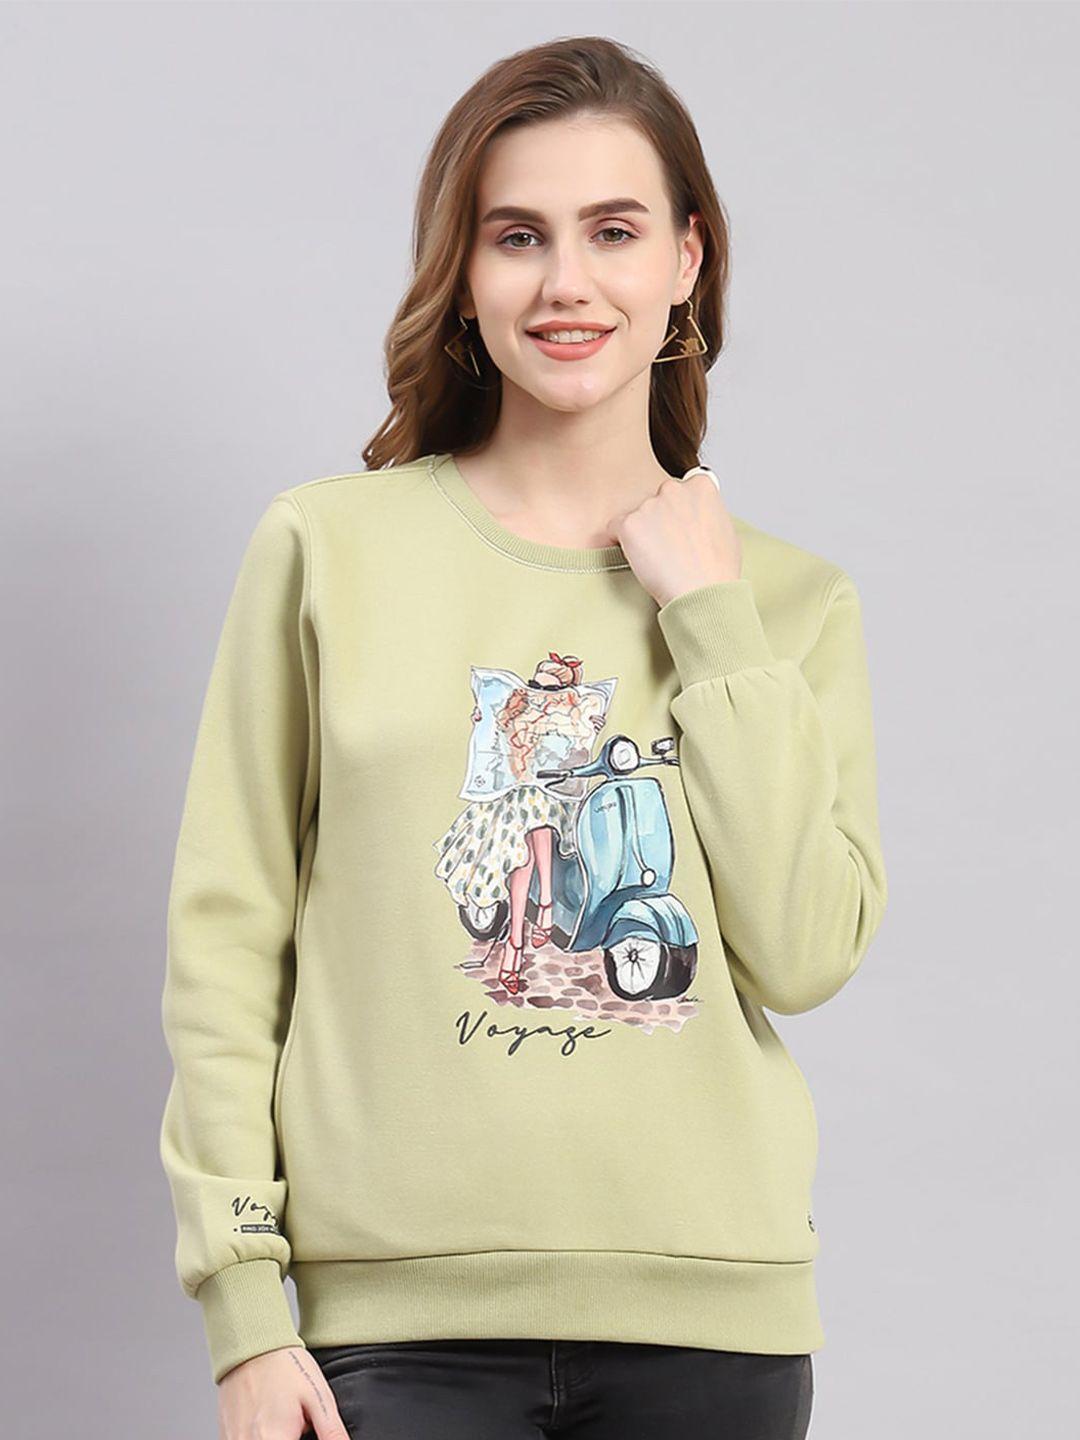 monte carlo graphic printed pullover sweatshirt